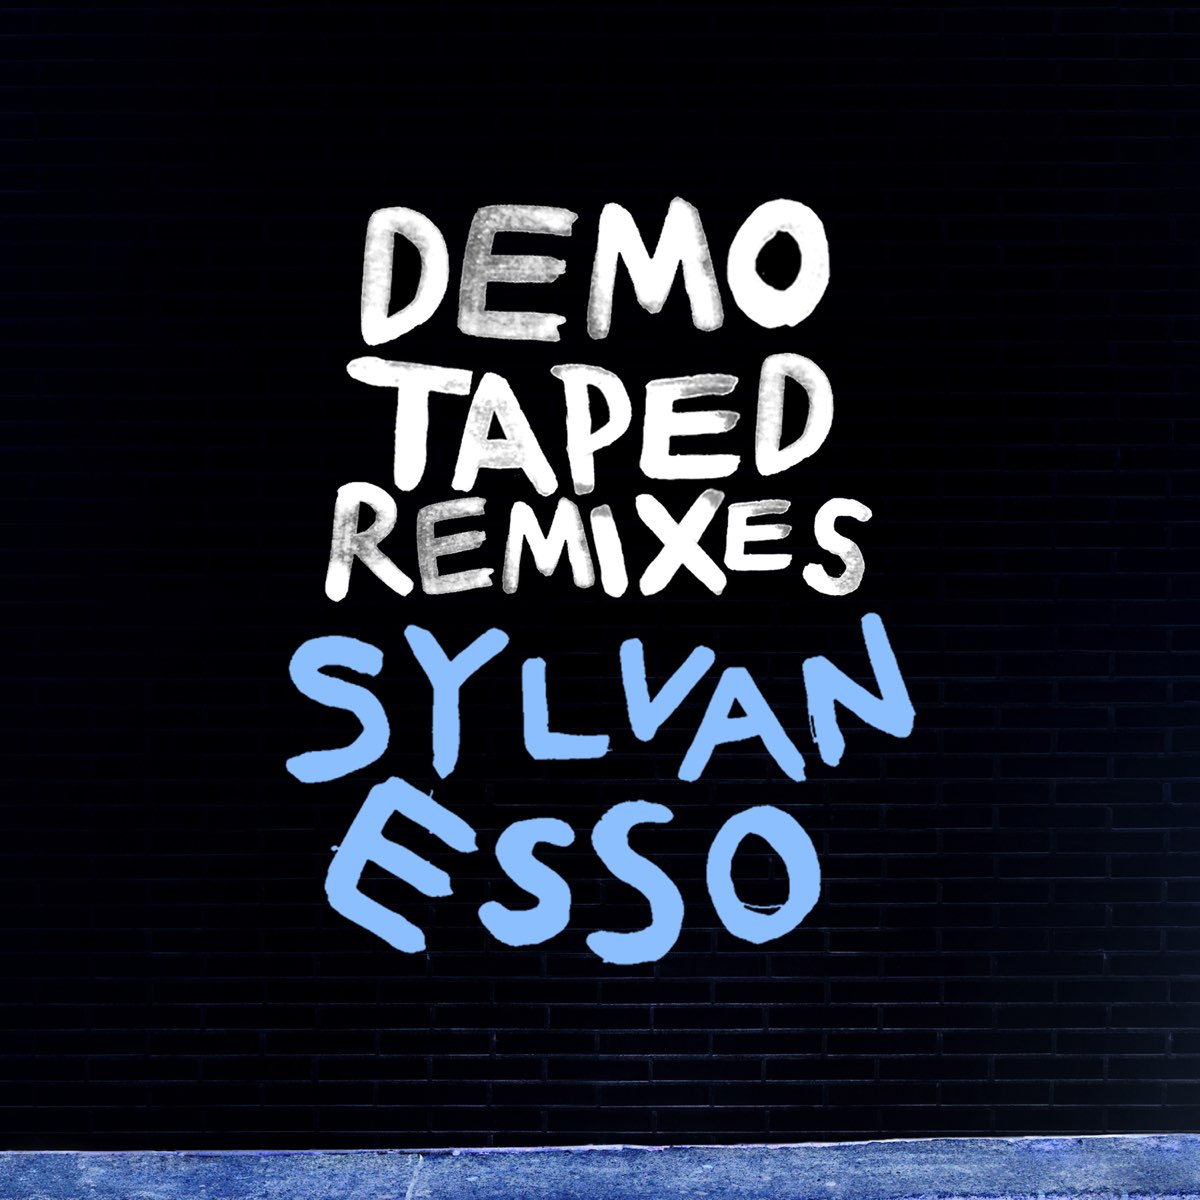 Sylvan esso. Demo Remix. Sylvan esso "what Now, Vinyl". Demo tapes